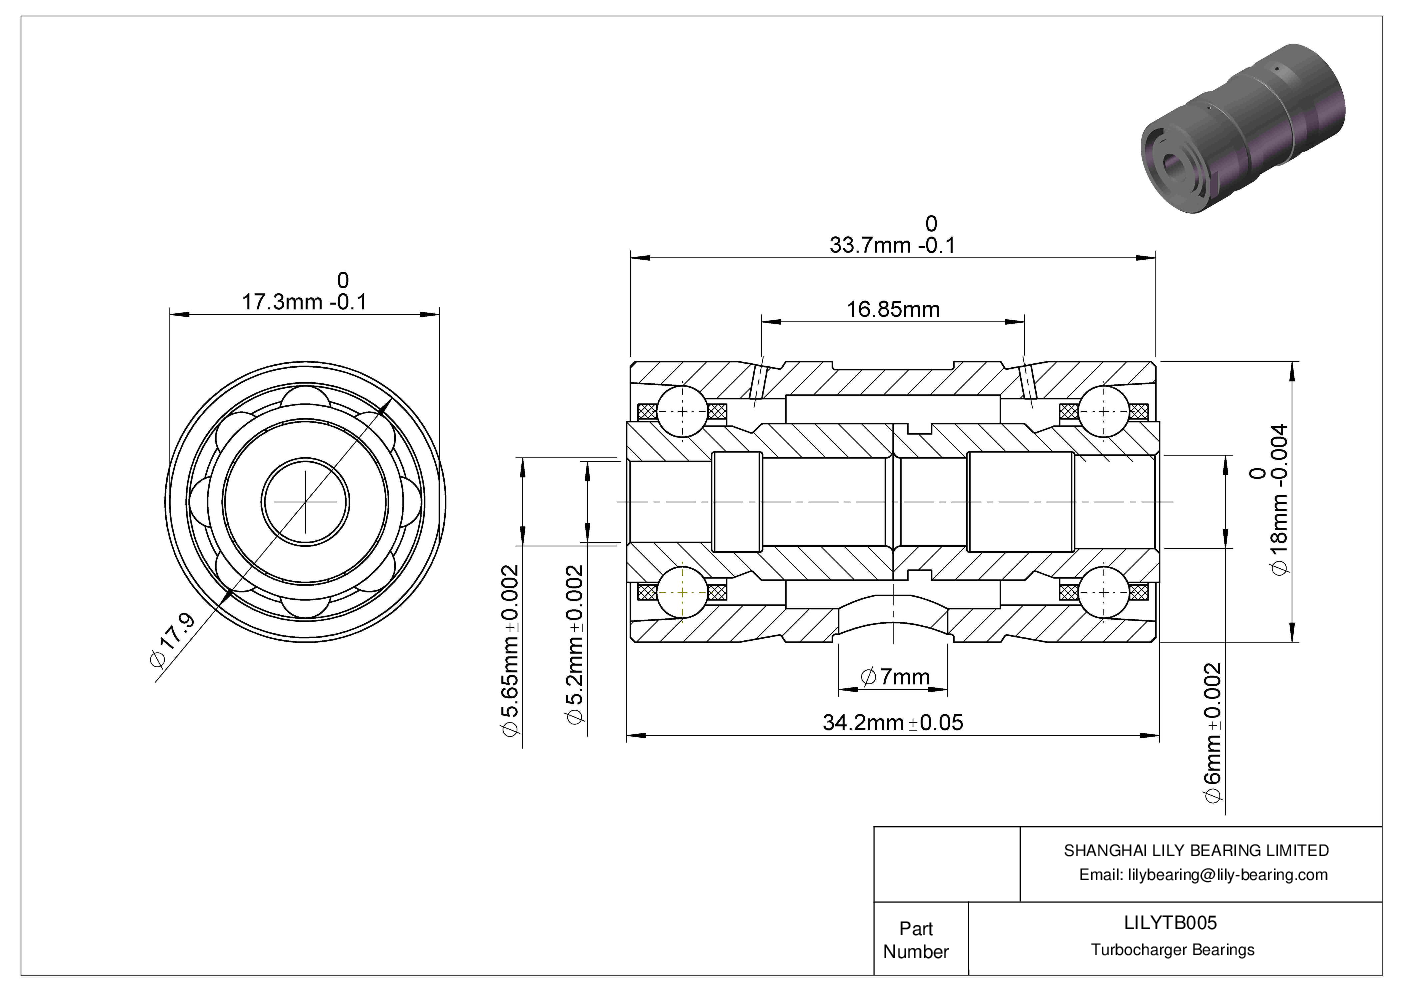 LILYTB005 Turbocharger Bearings cad drawing